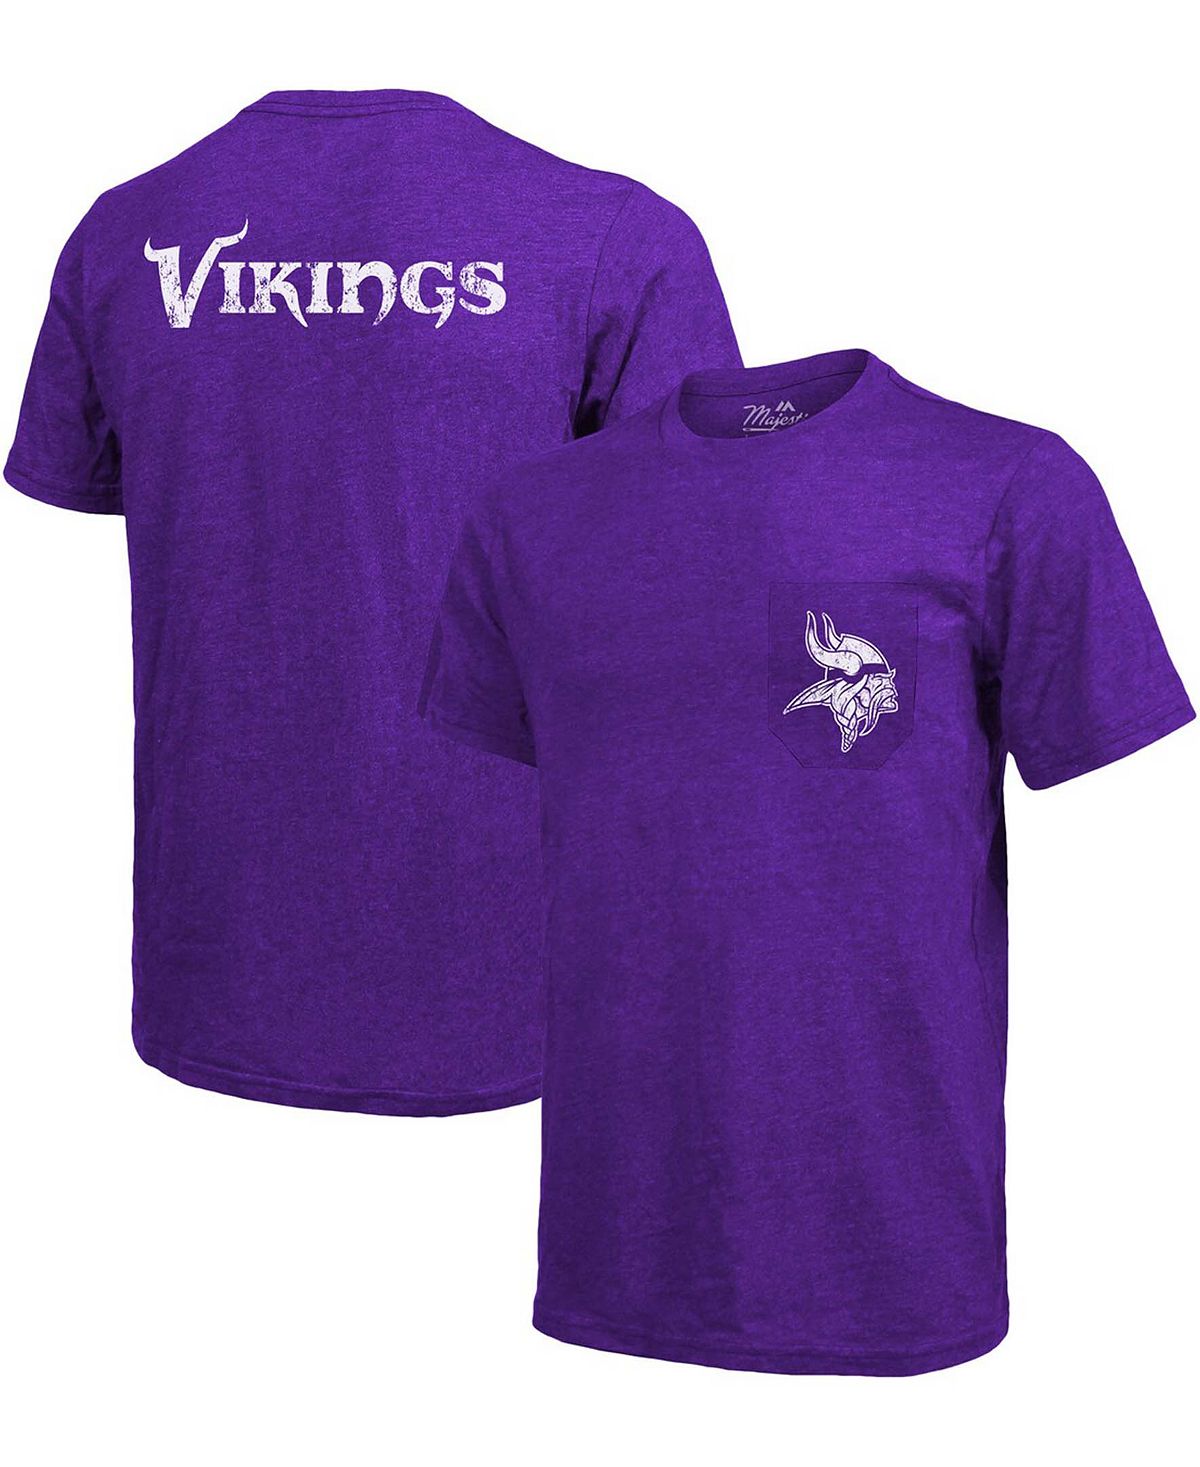 Футболка minnesota vikings tri-blend pocket pocket - пурпурный Majestic, фиолетовый футболка с карманами tri blend new york jets threads меланжево зеленый majestic